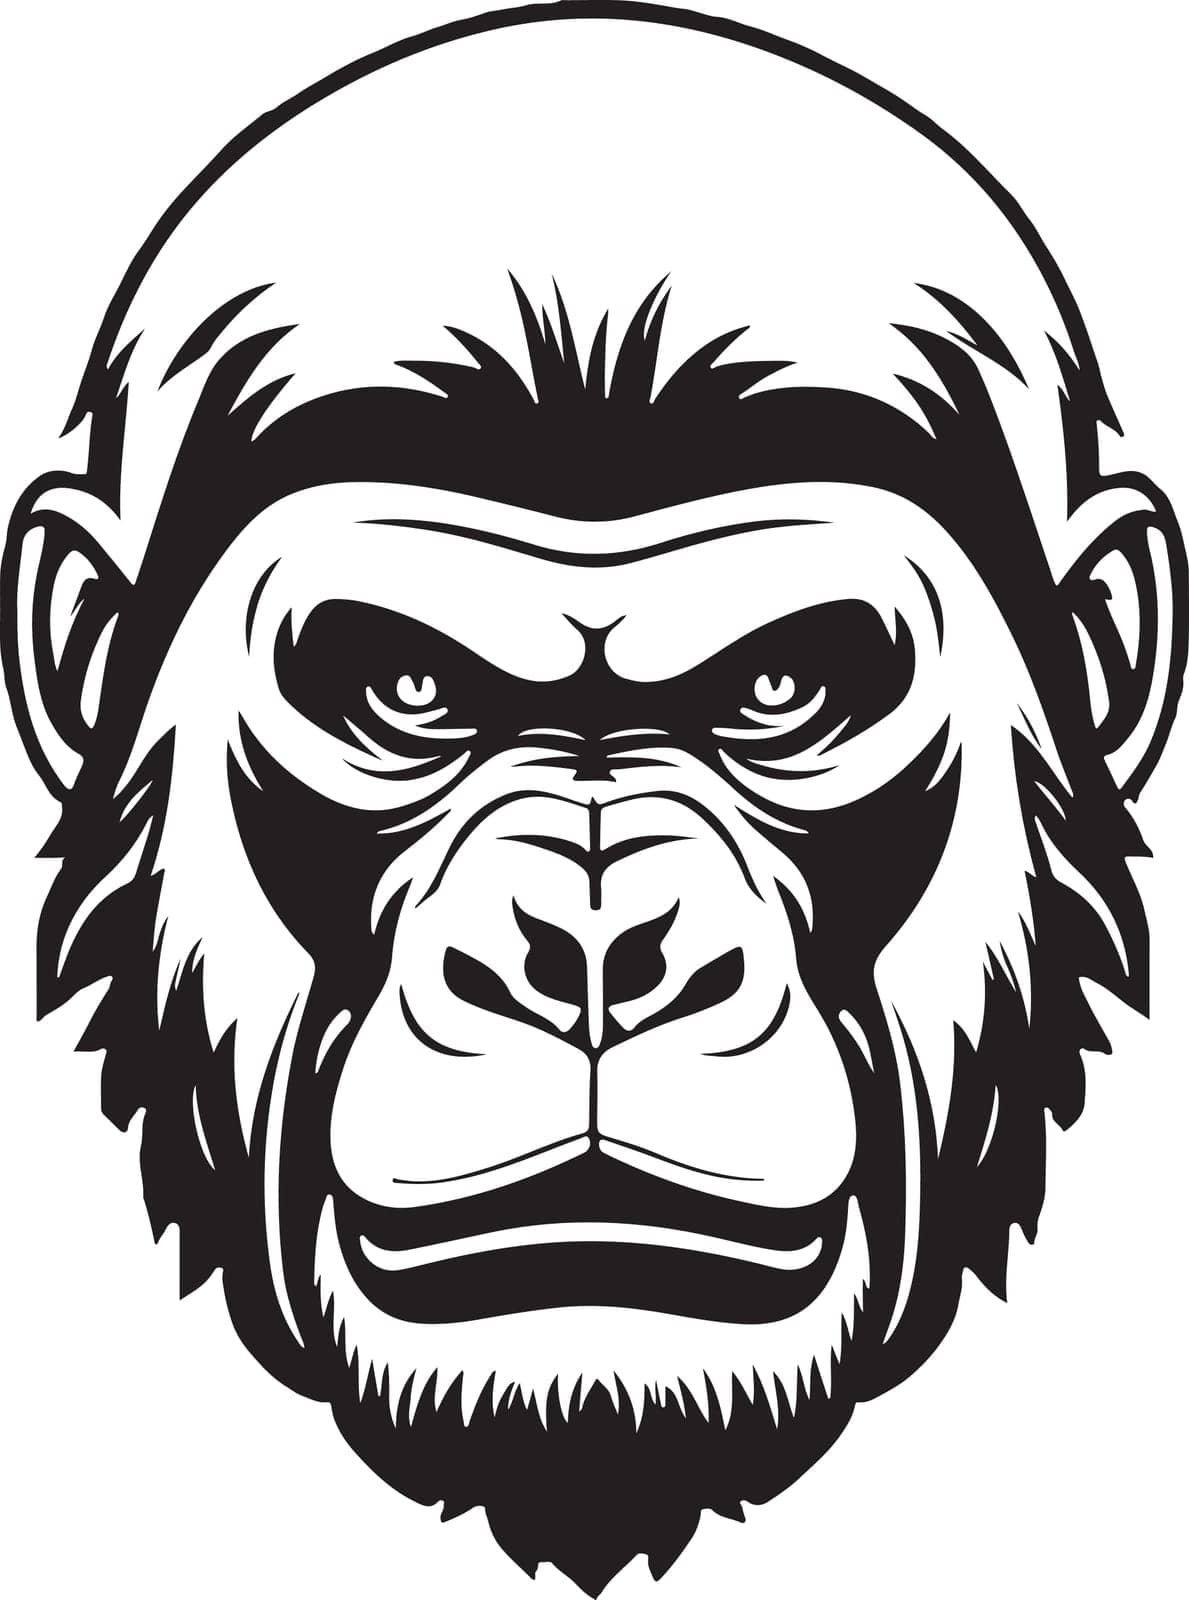 Pretty and powerful gorilla emblem art vector. Vector illustration